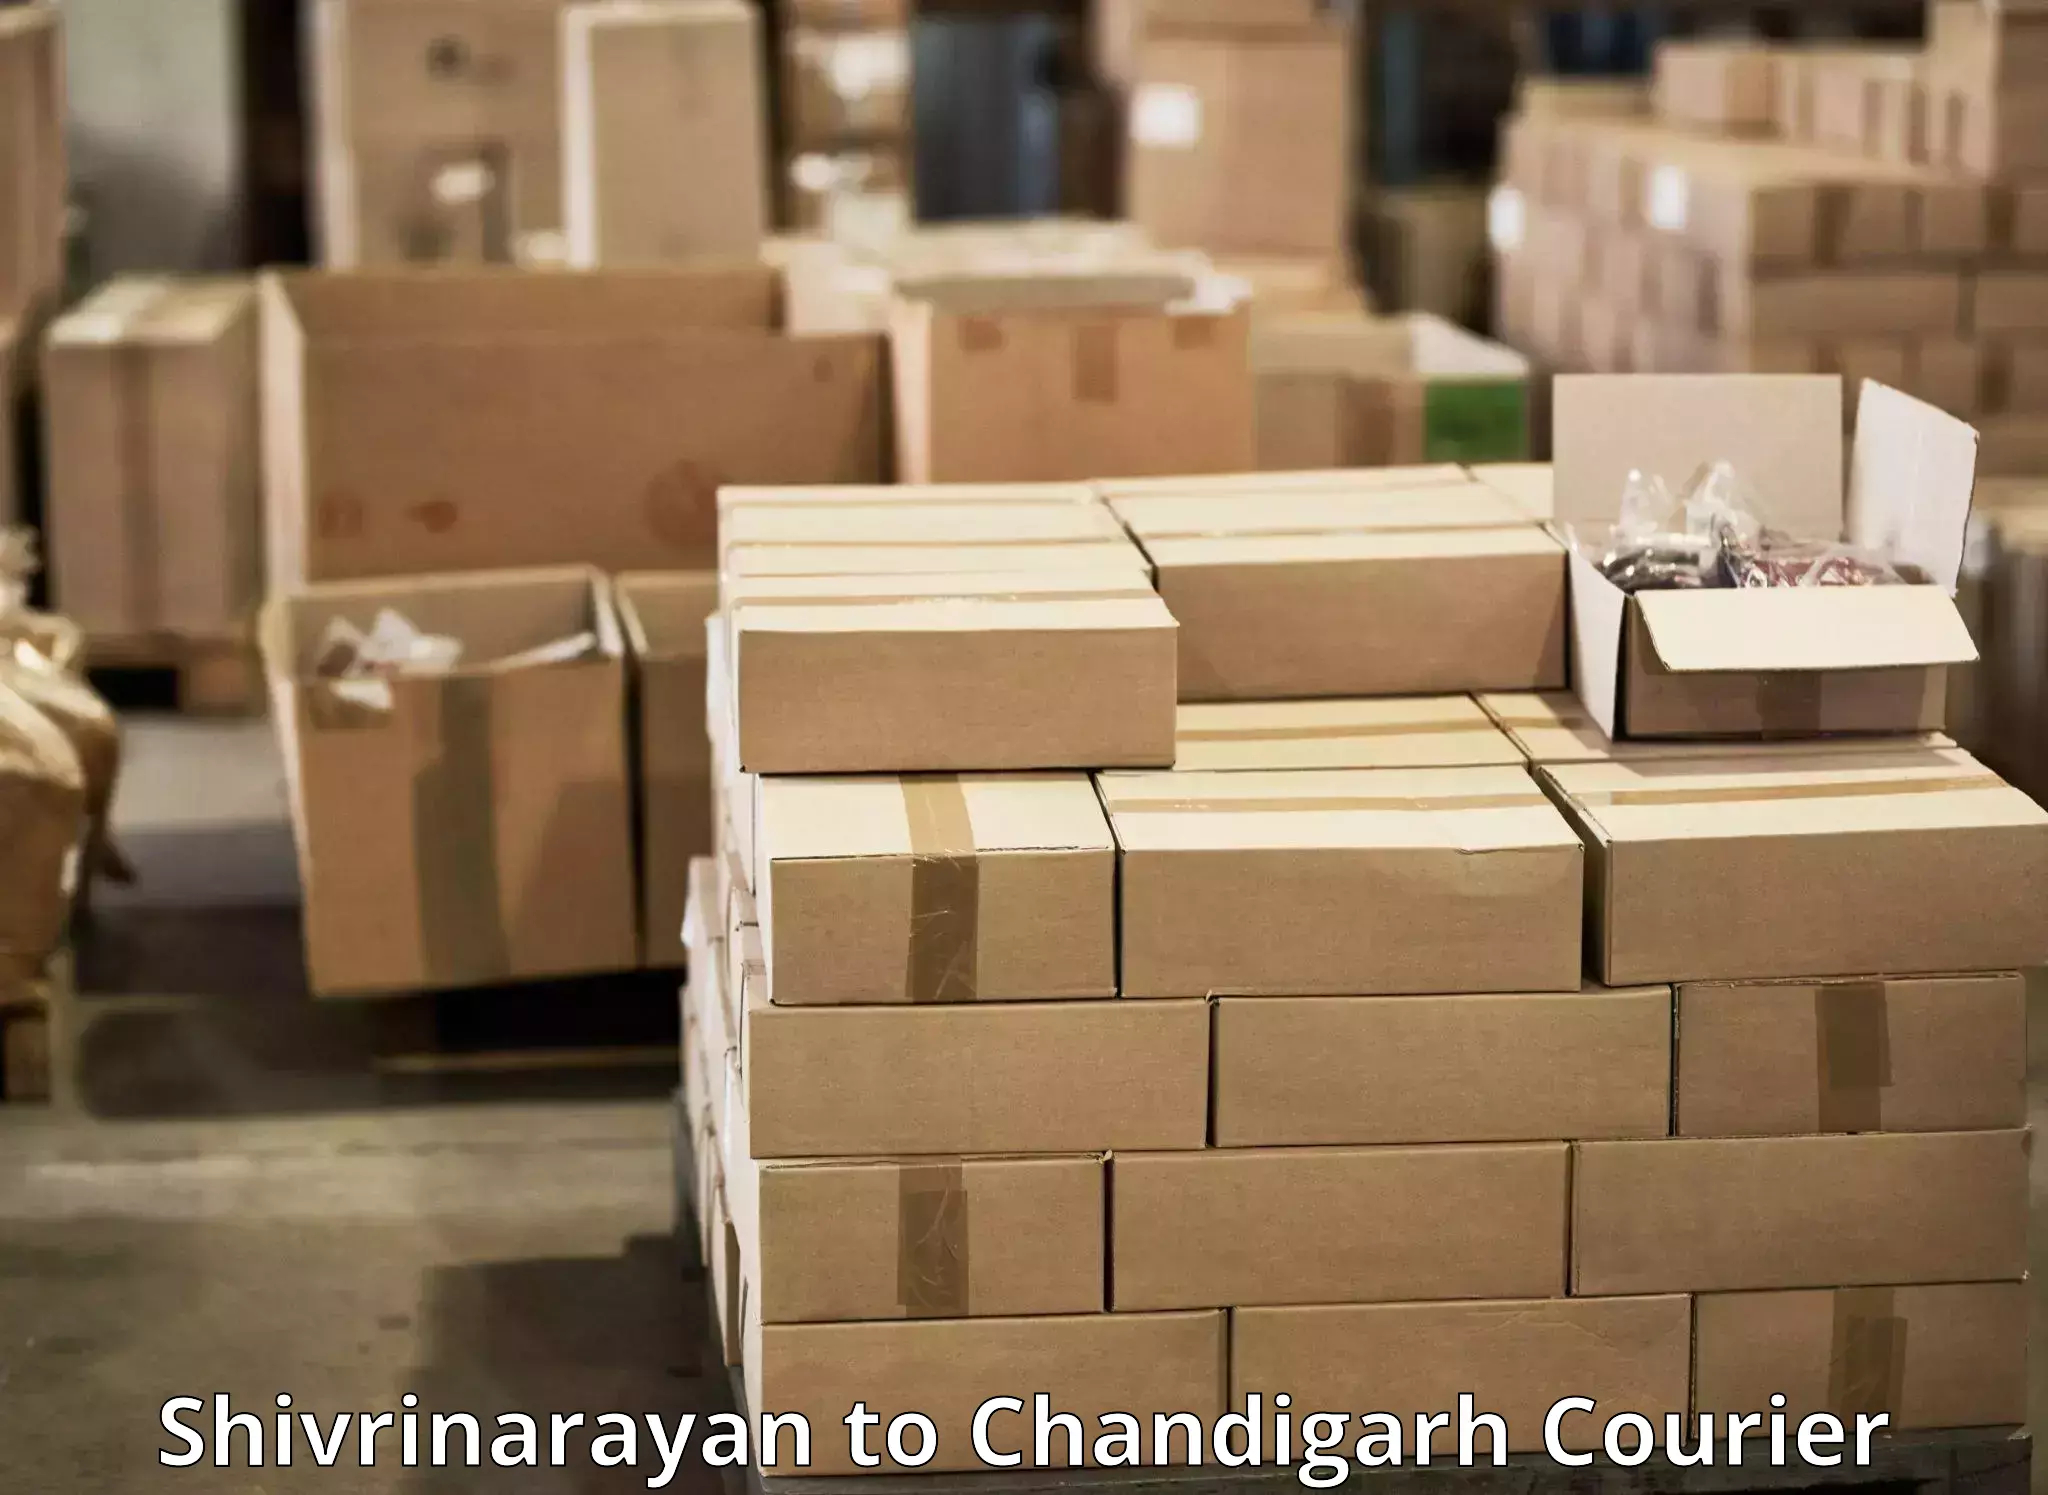 Express postal services Shivrinarayan to Chandigarh